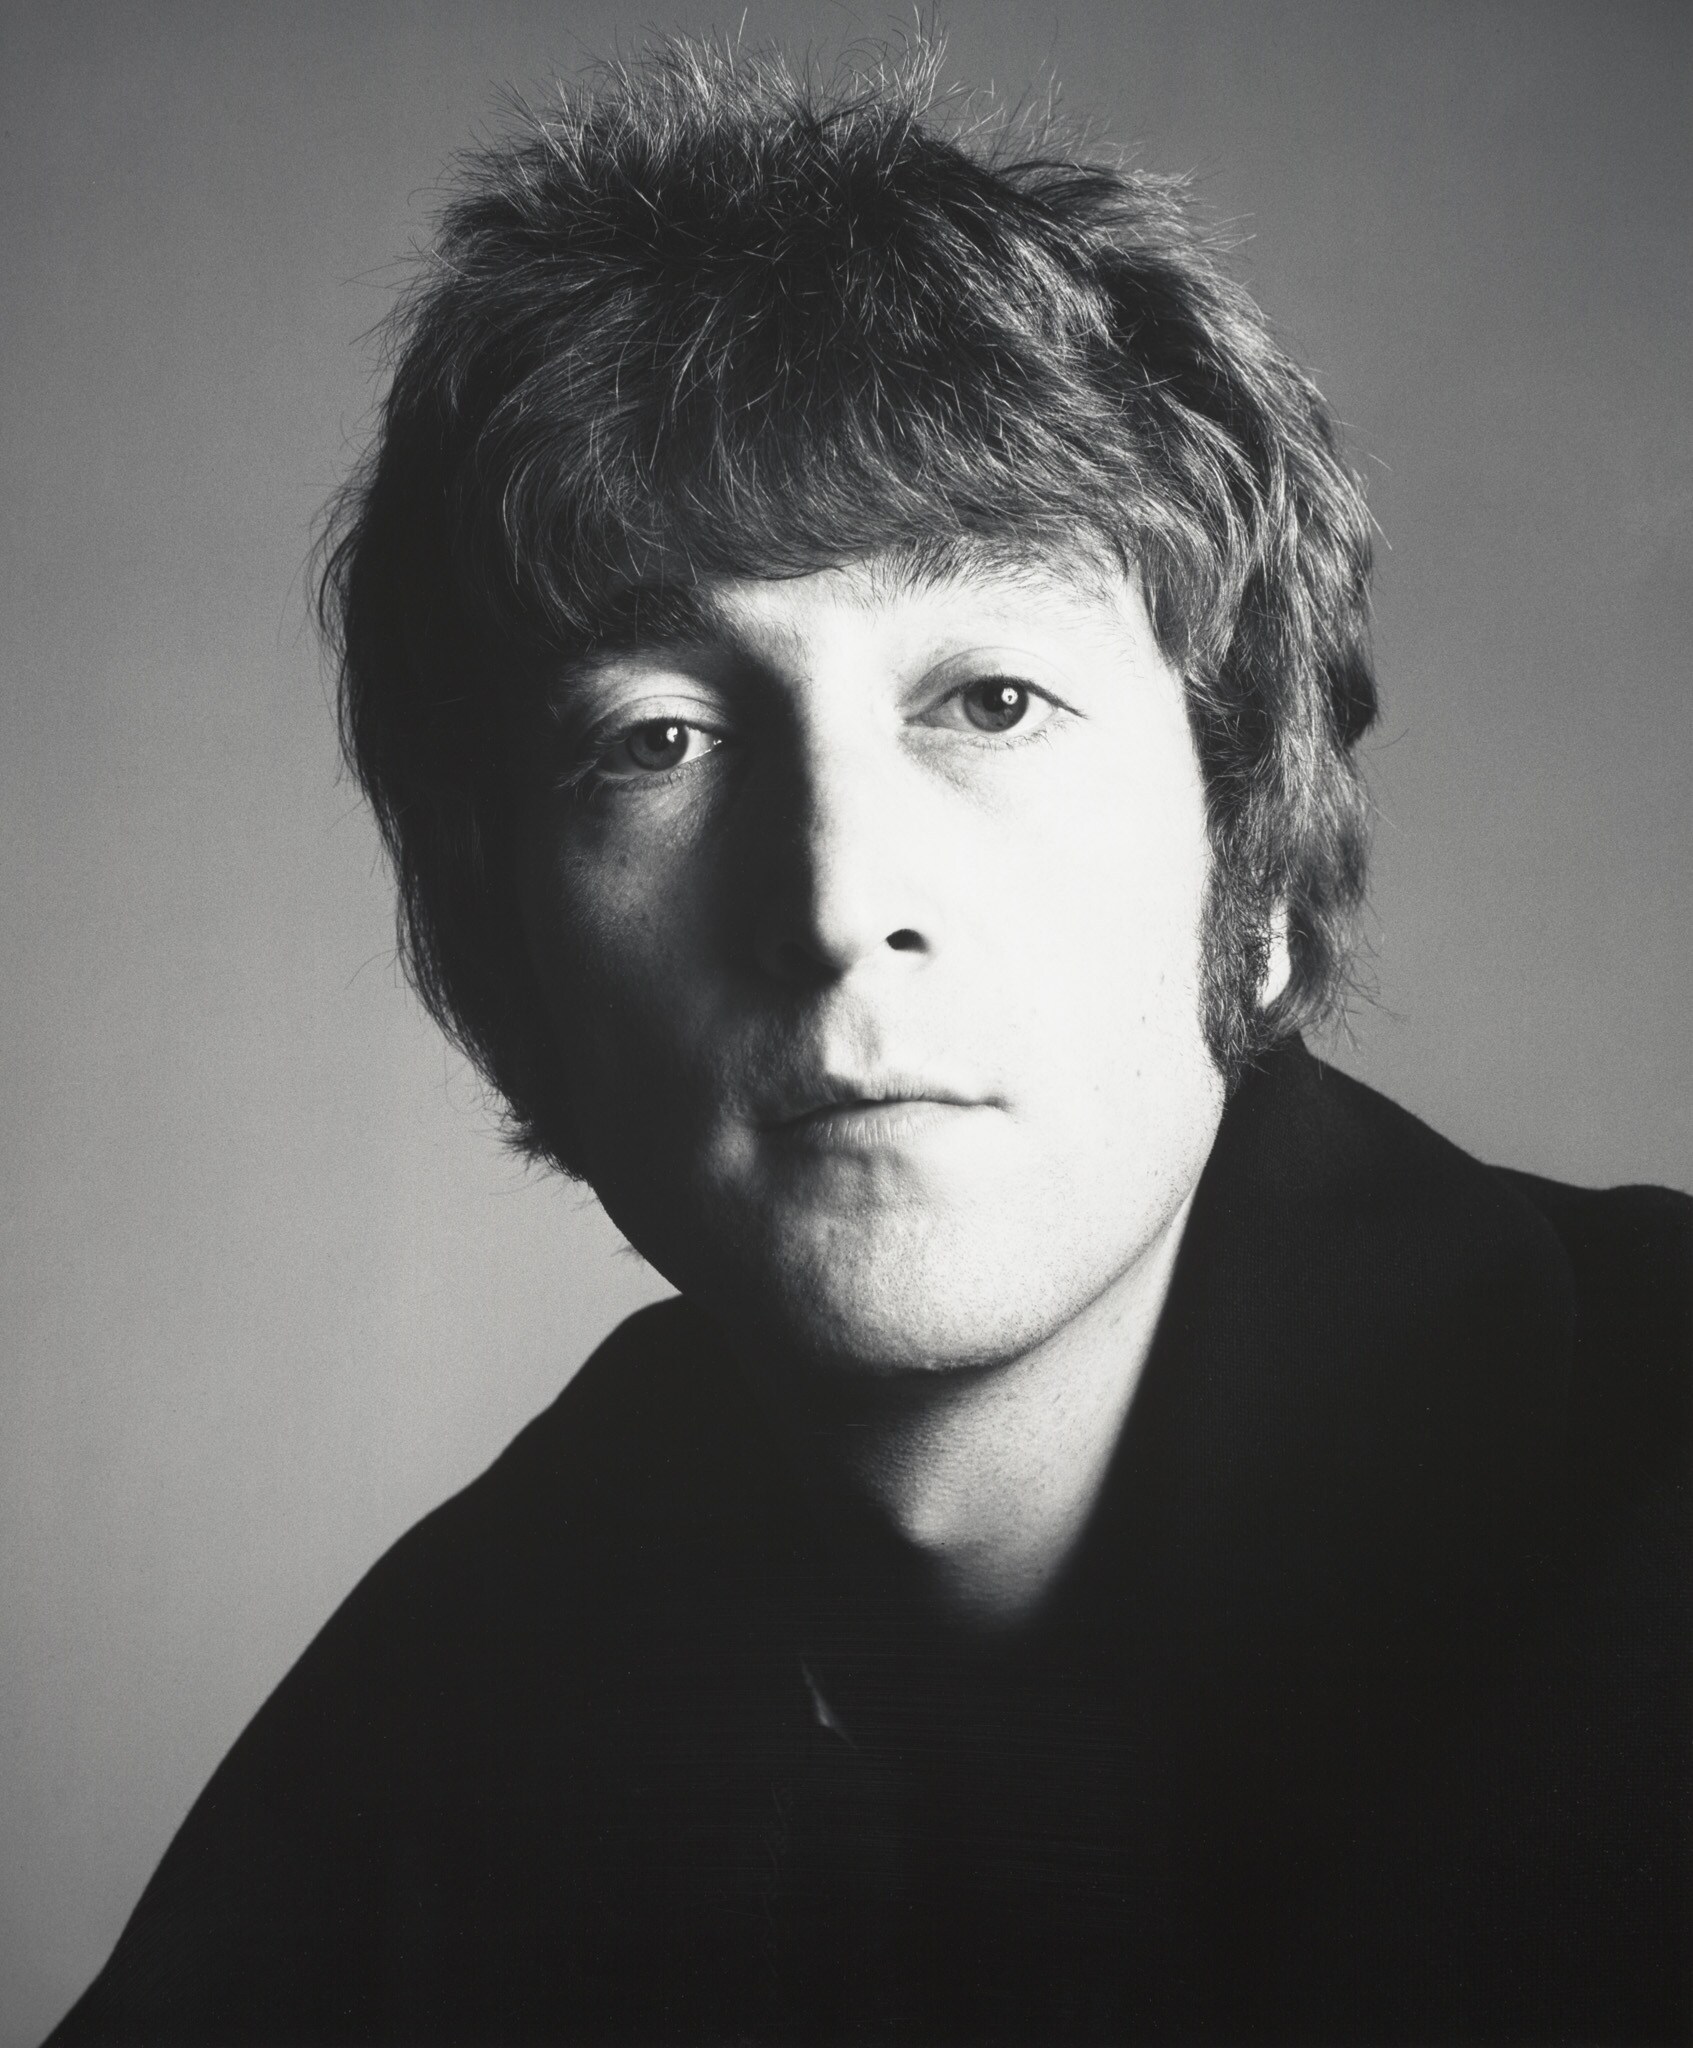 Richard Avedon, John Lennon, musician, The Beatles, London, England, August 11, 1967. 